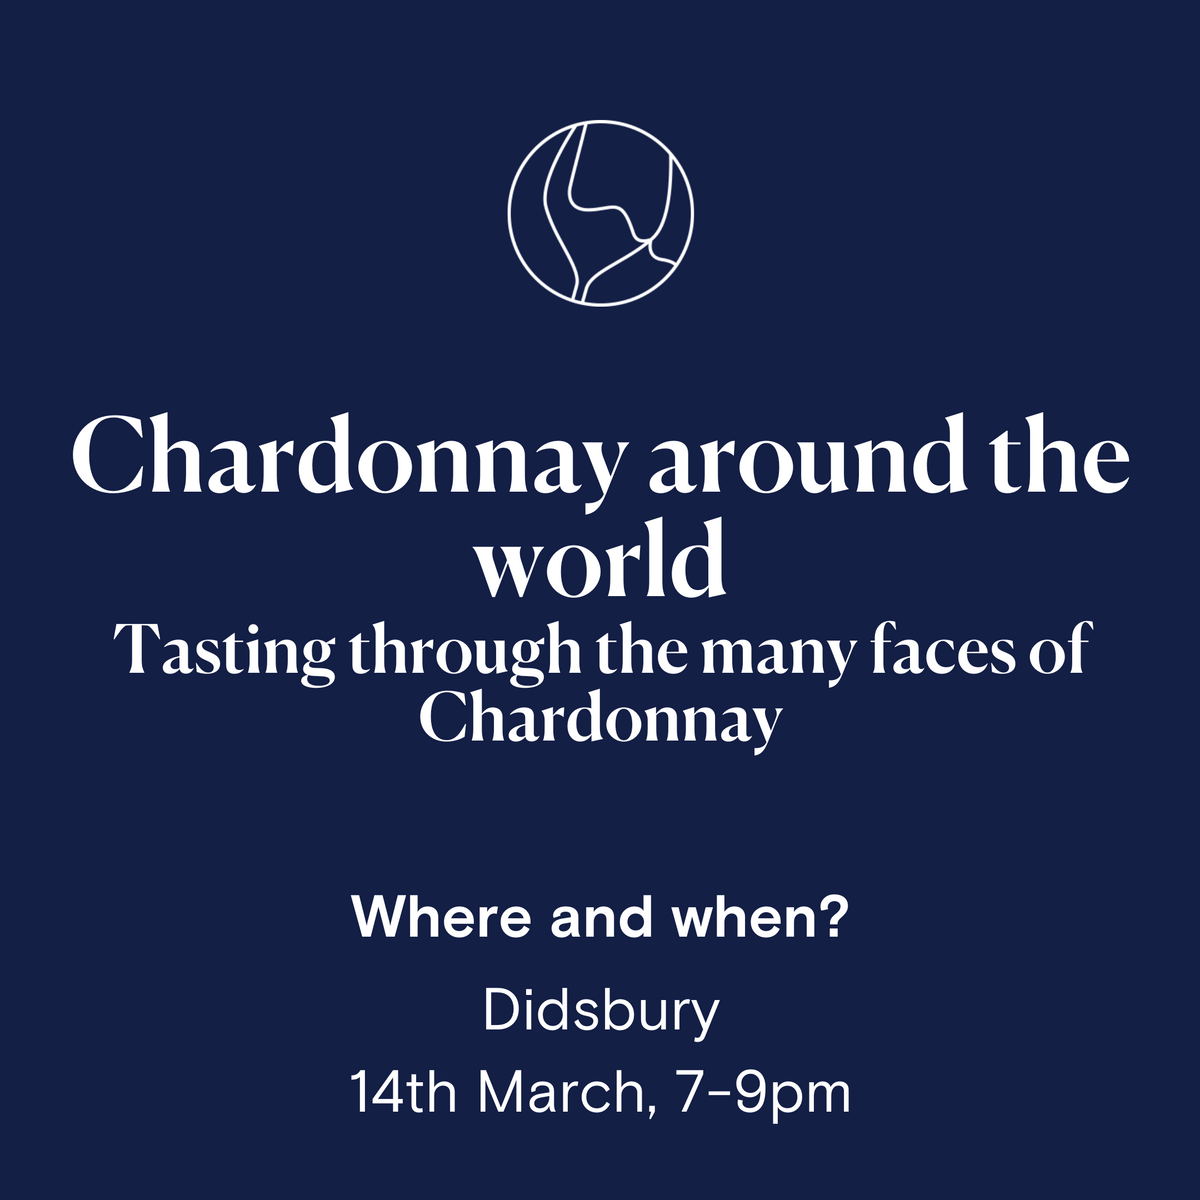 Chardonnay around the world